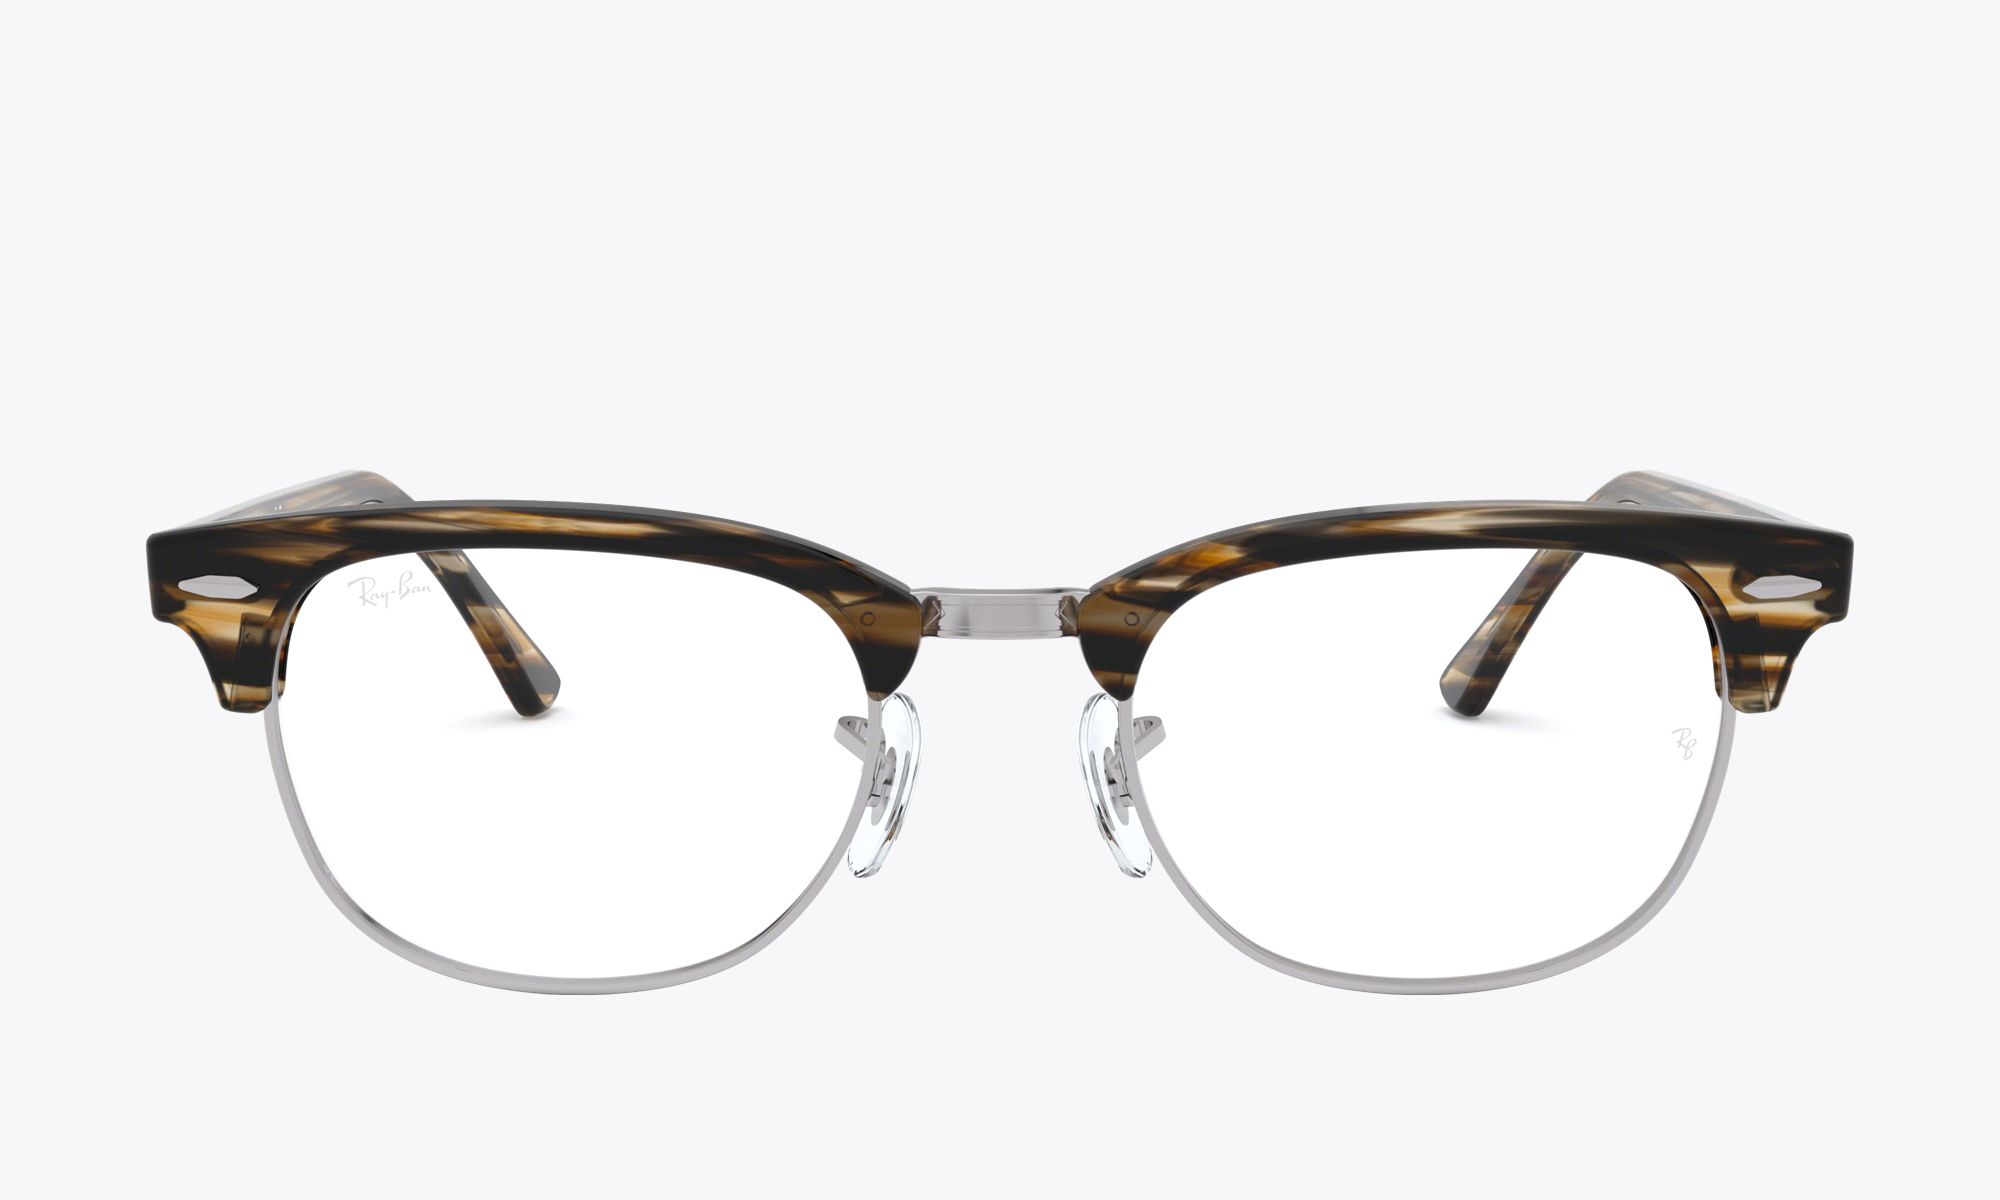 Ray Ban Clubmaster Optics Glasses Com Free Shipping